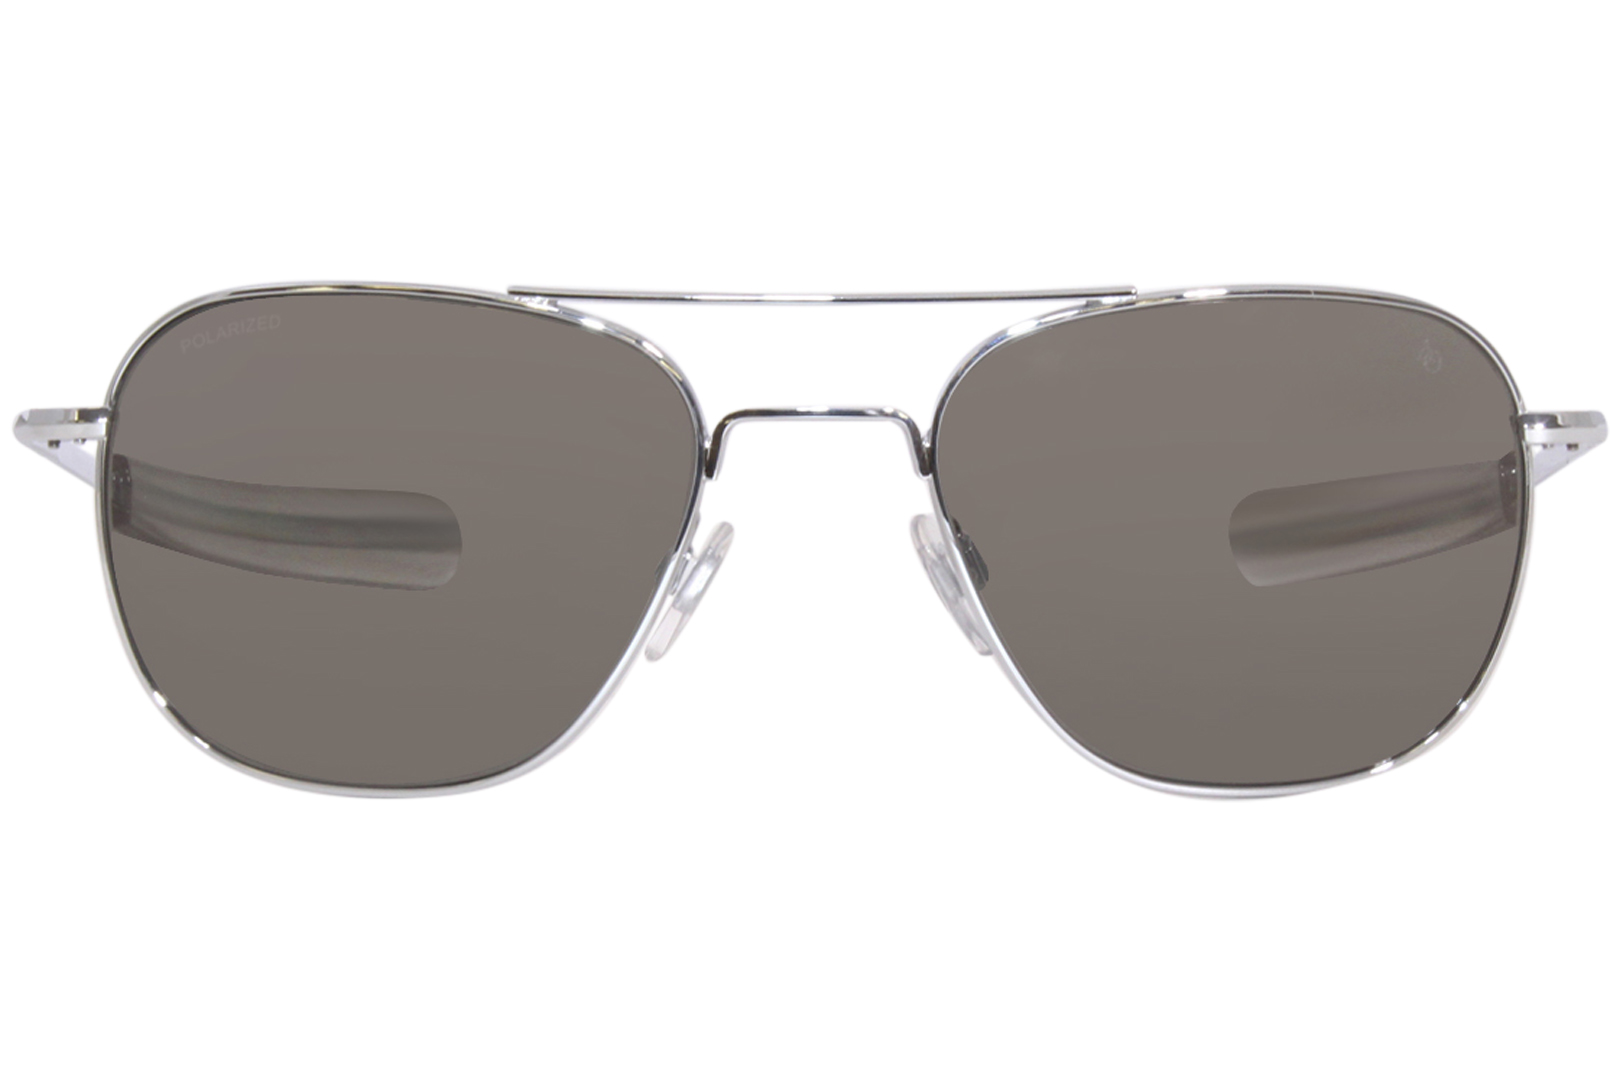 American Optical Original Pilot Gyg P Sunglasses Silver Grey Polarized 57 20 140